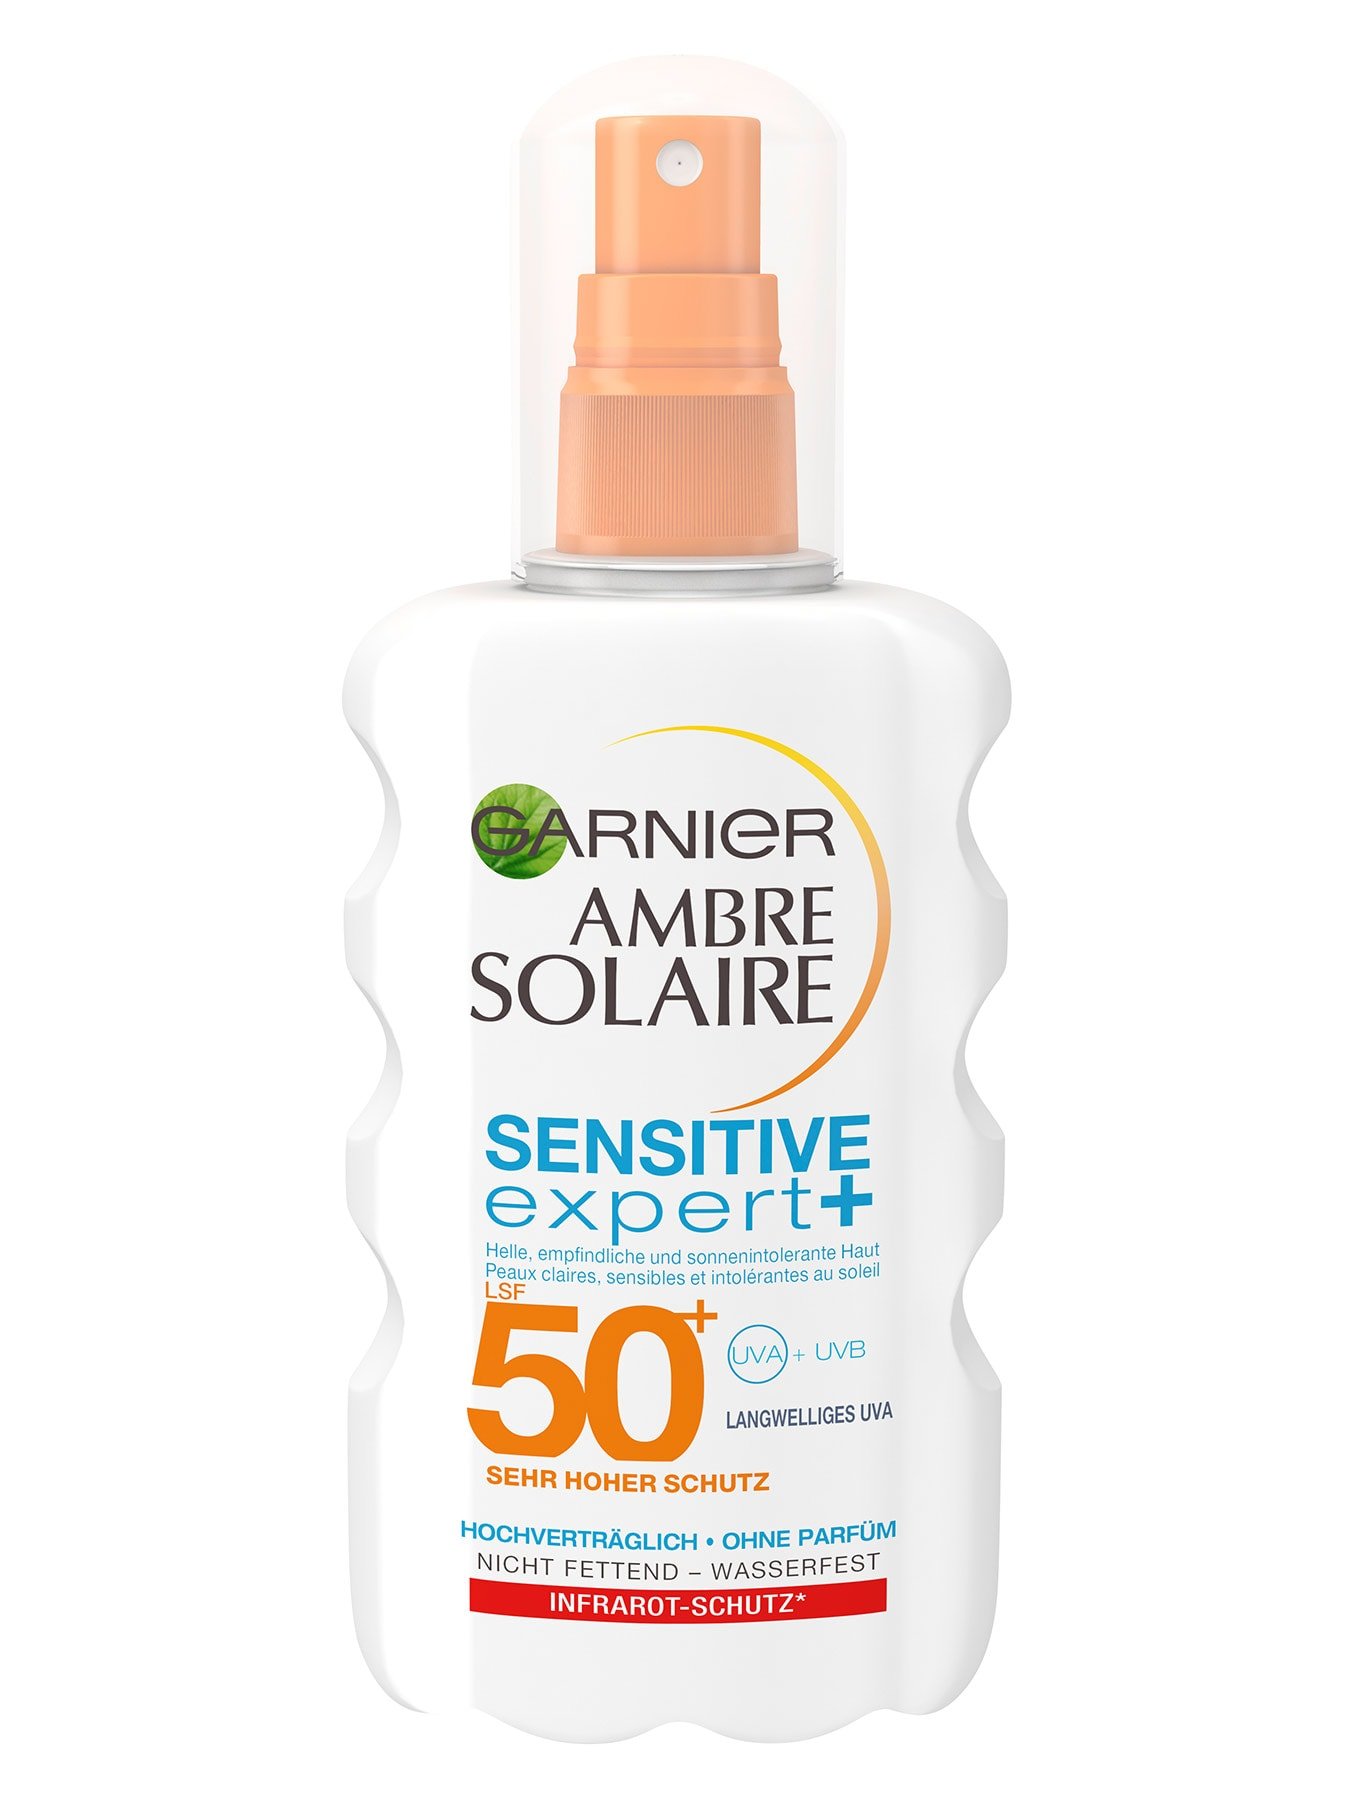 Solaire Sensitive 50+ | Garnier Spray mit Ambre LSF Expert